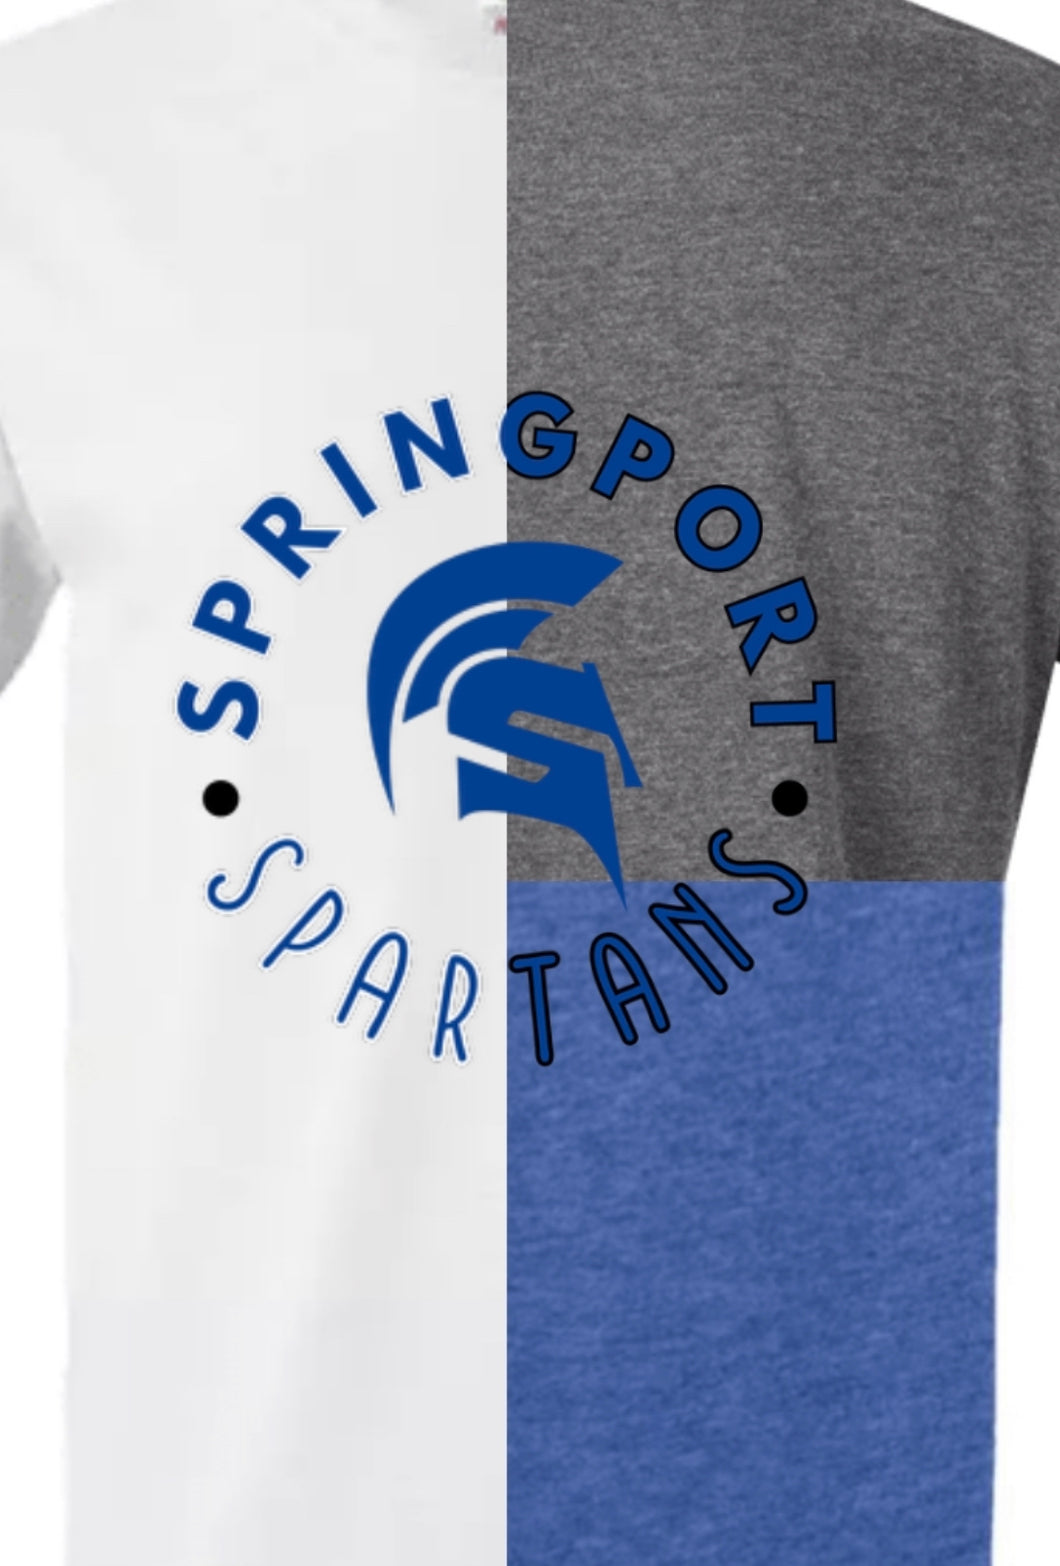 Springport Spartans Mascot Shirt